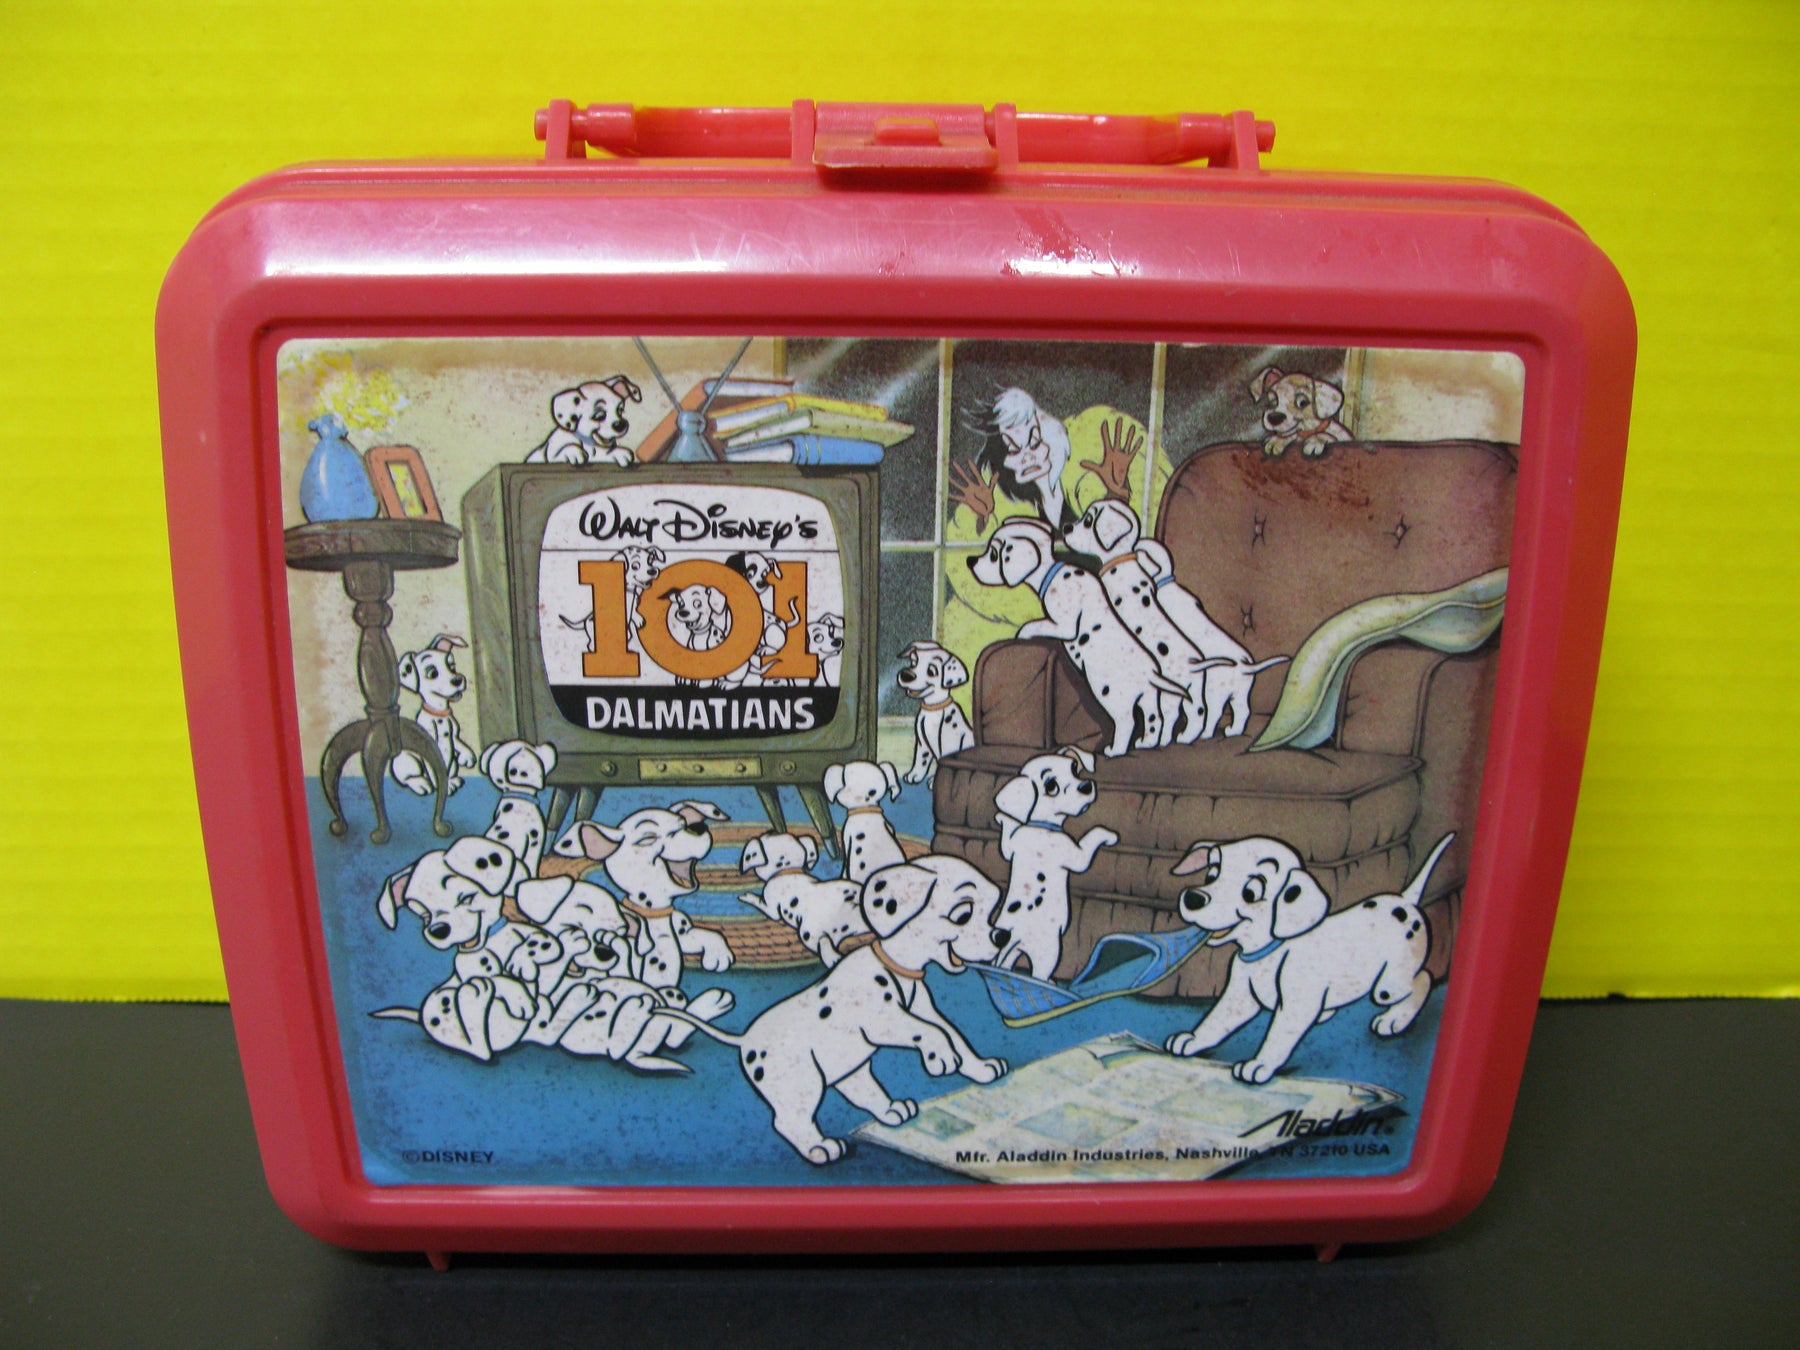 Walt Disney's 101 Dalmatians Plastic Lunchbox and Thermos